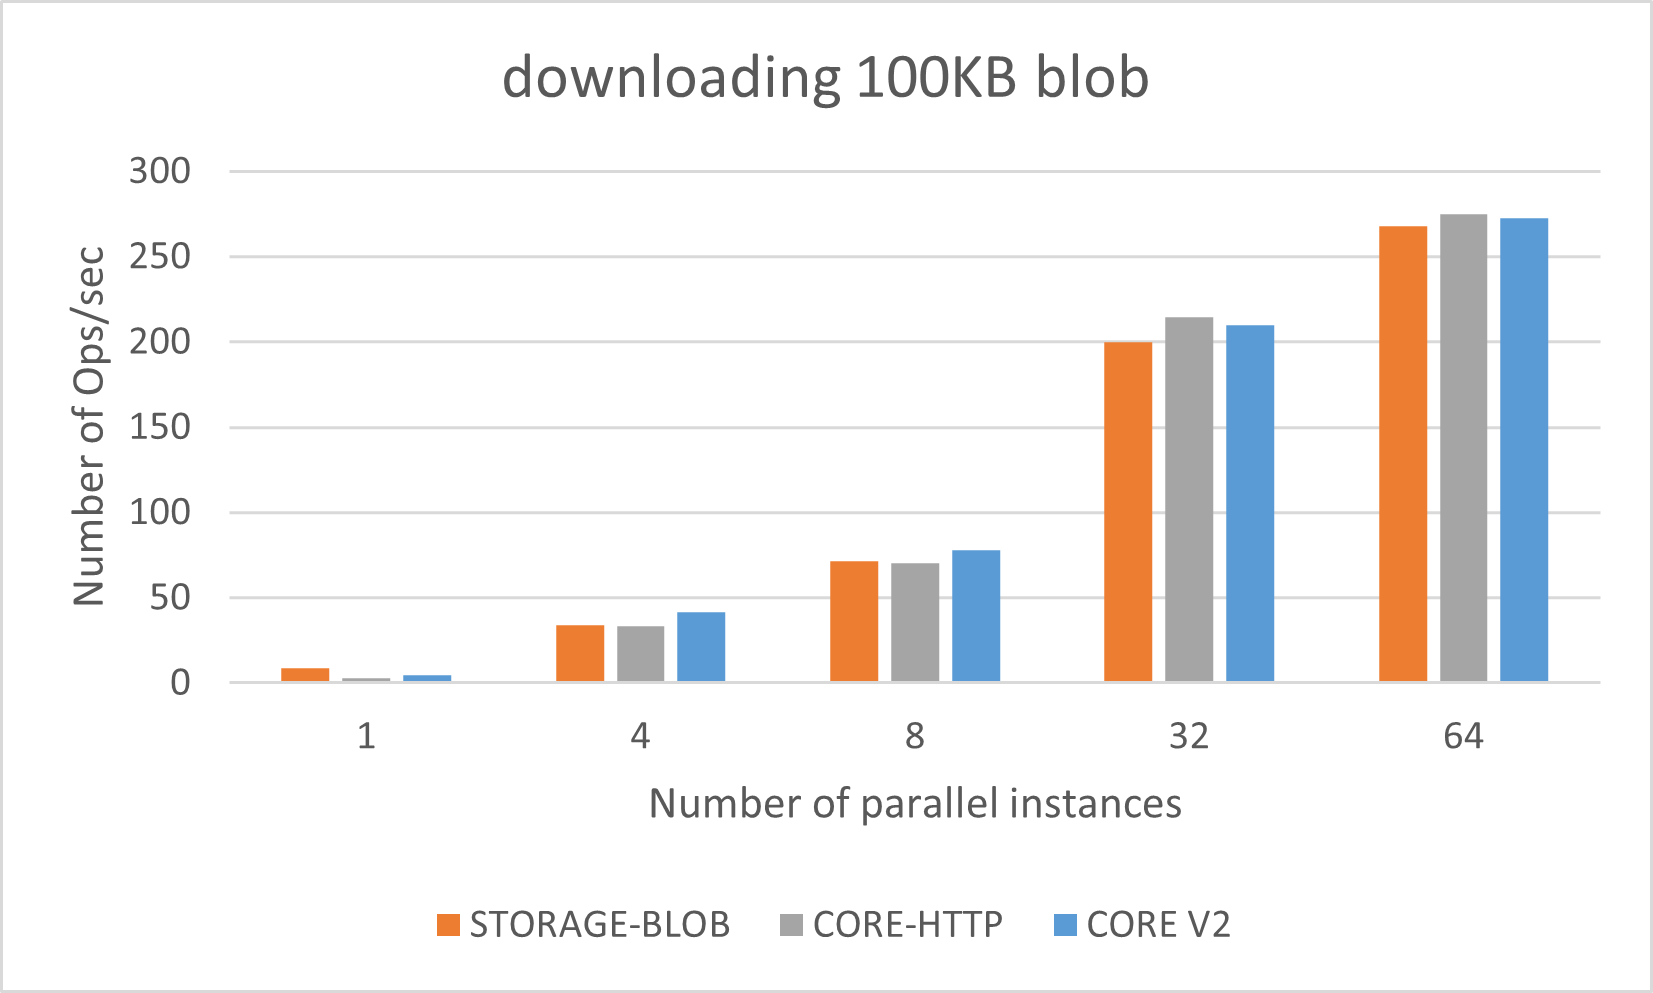 Blob download with SAS 100KB